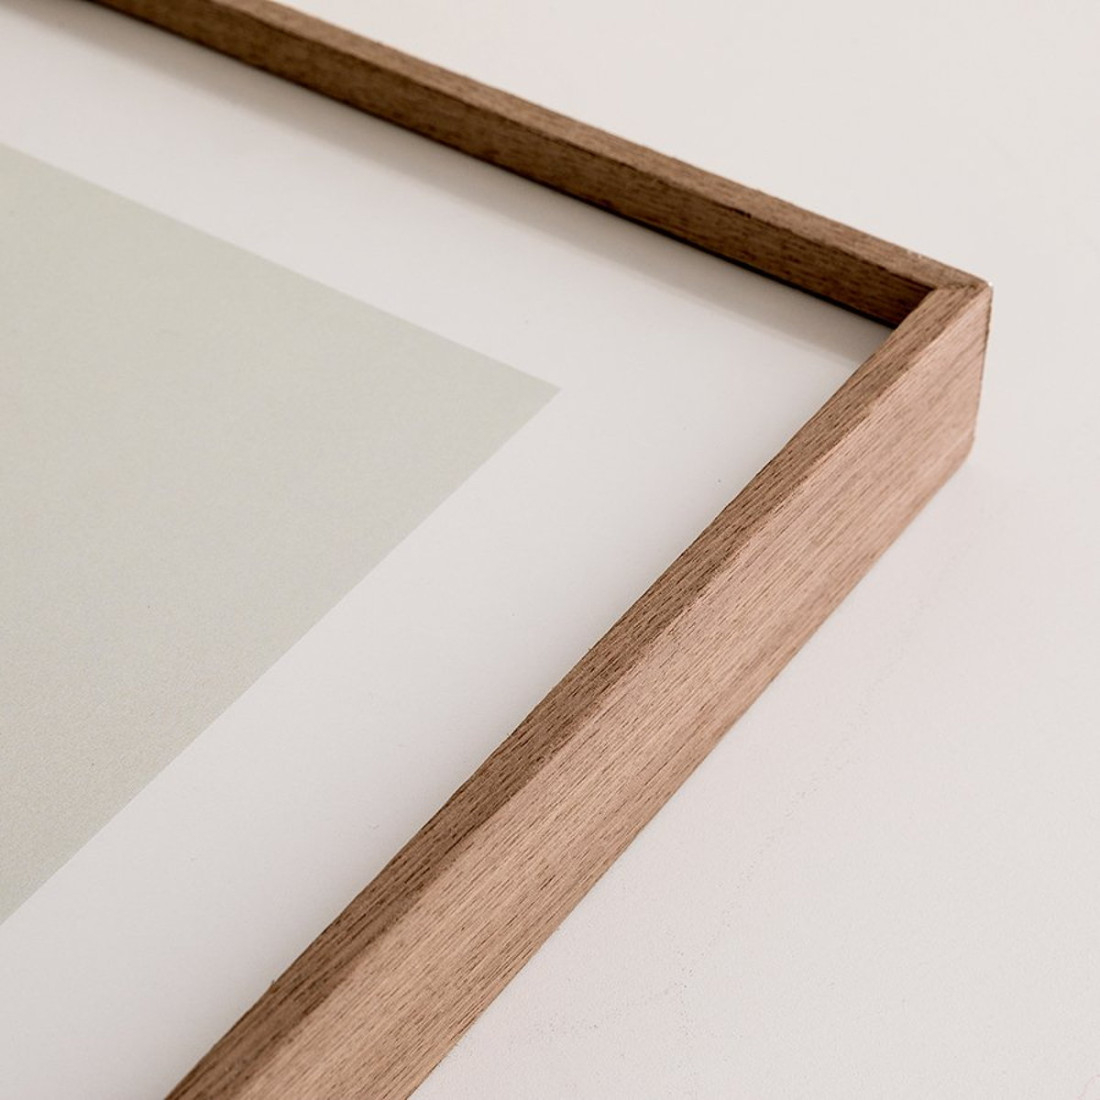 Vossington Marco de fotos fino de nogal 50x70 cm - Acabado con vetas de  madera - Moderno - Para